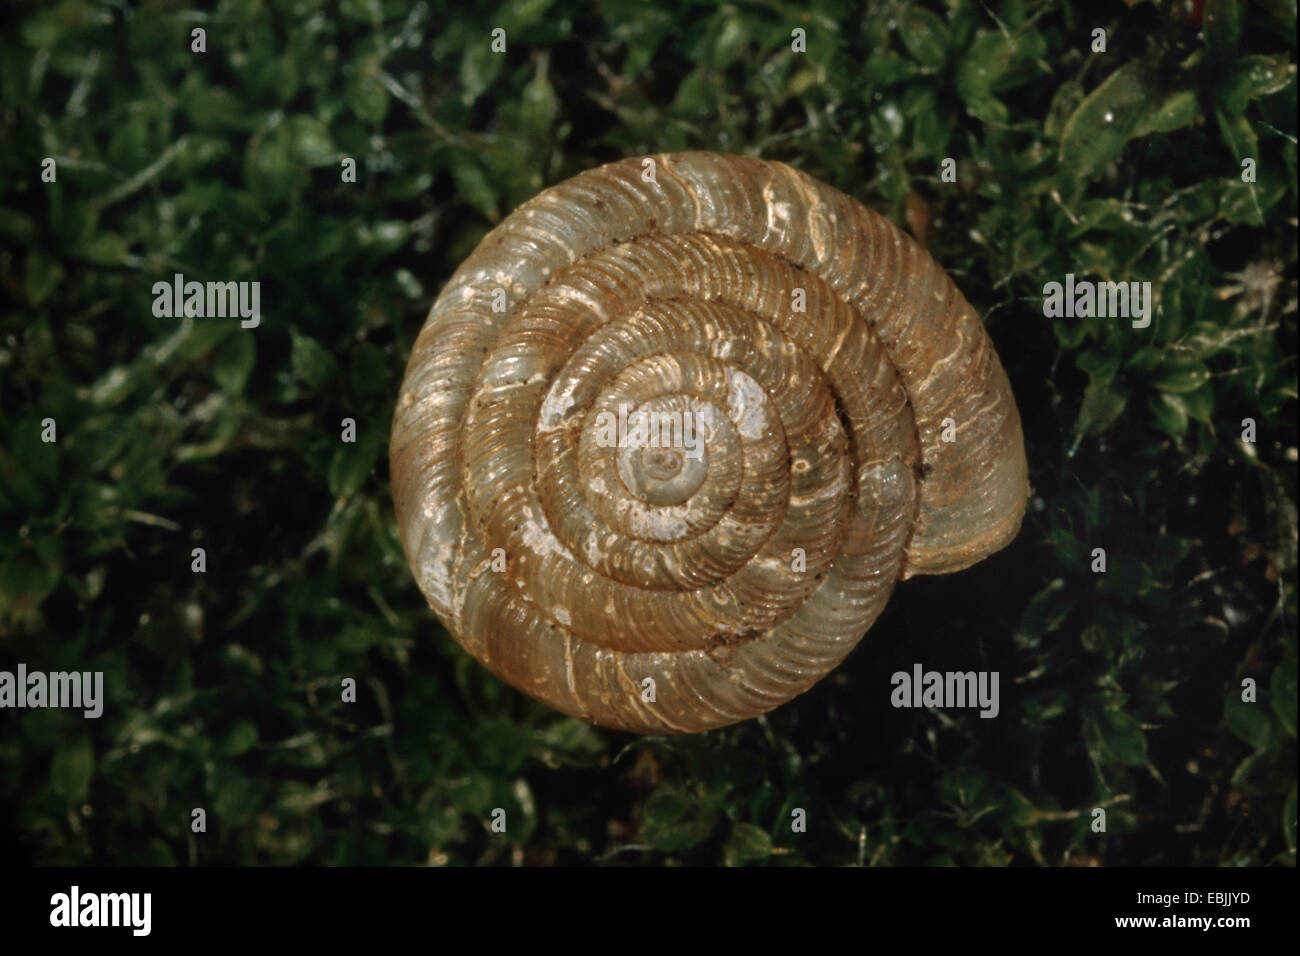 Escargot arrondies, disque rond escargot, escargot rayonnée (Discus rotundatus, Goniodiscus rotundatus), vue de dessus de la coquille Banque D'Images